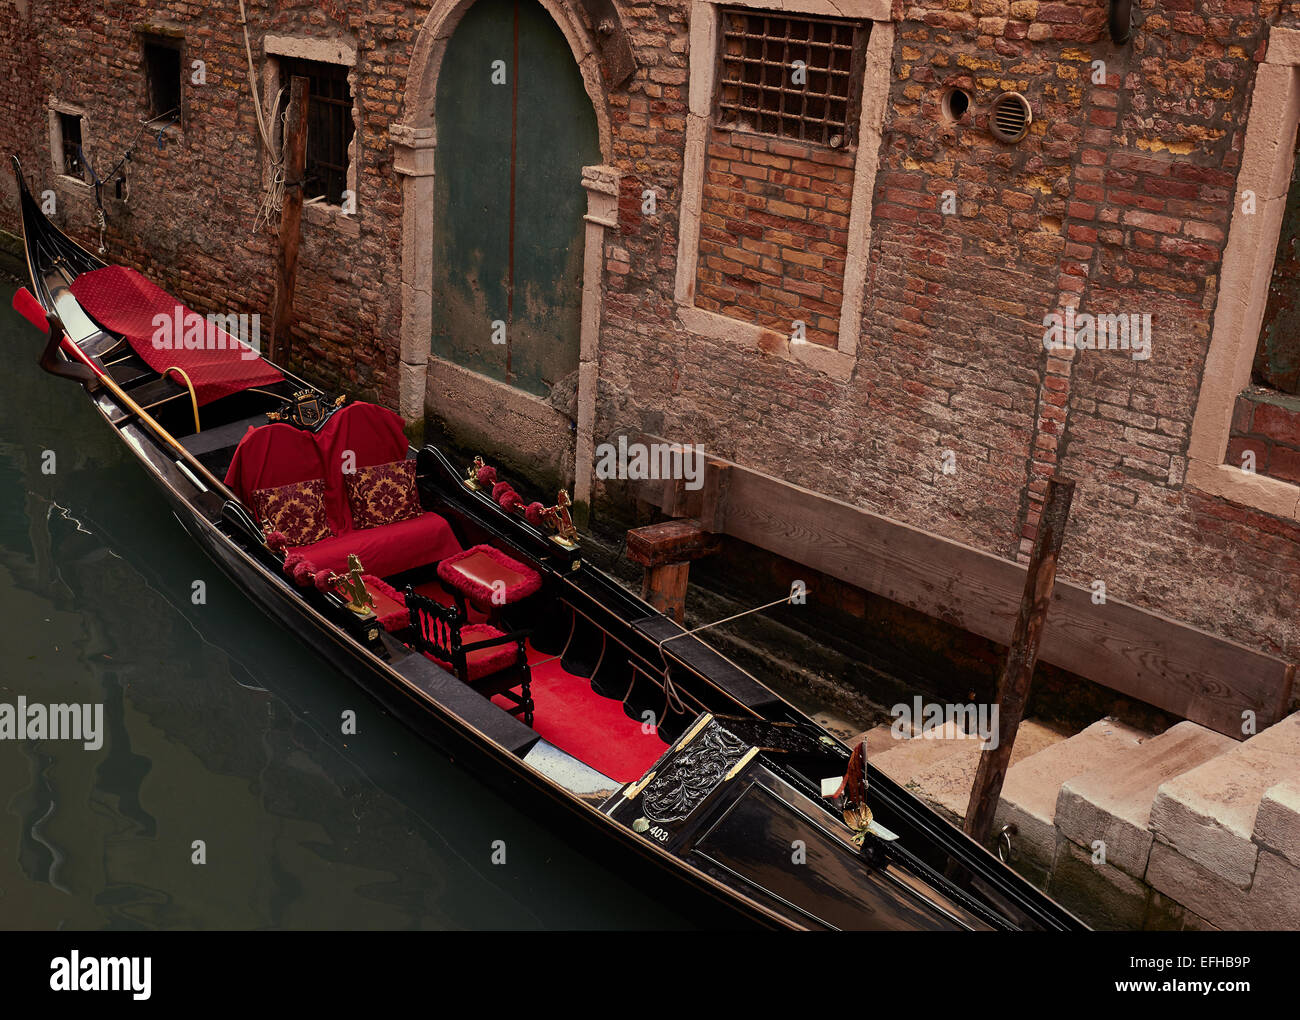 Dekorative rote innere der Gondel vertäut schrittweise Venedig Veneto Italien Europa Stockfoto